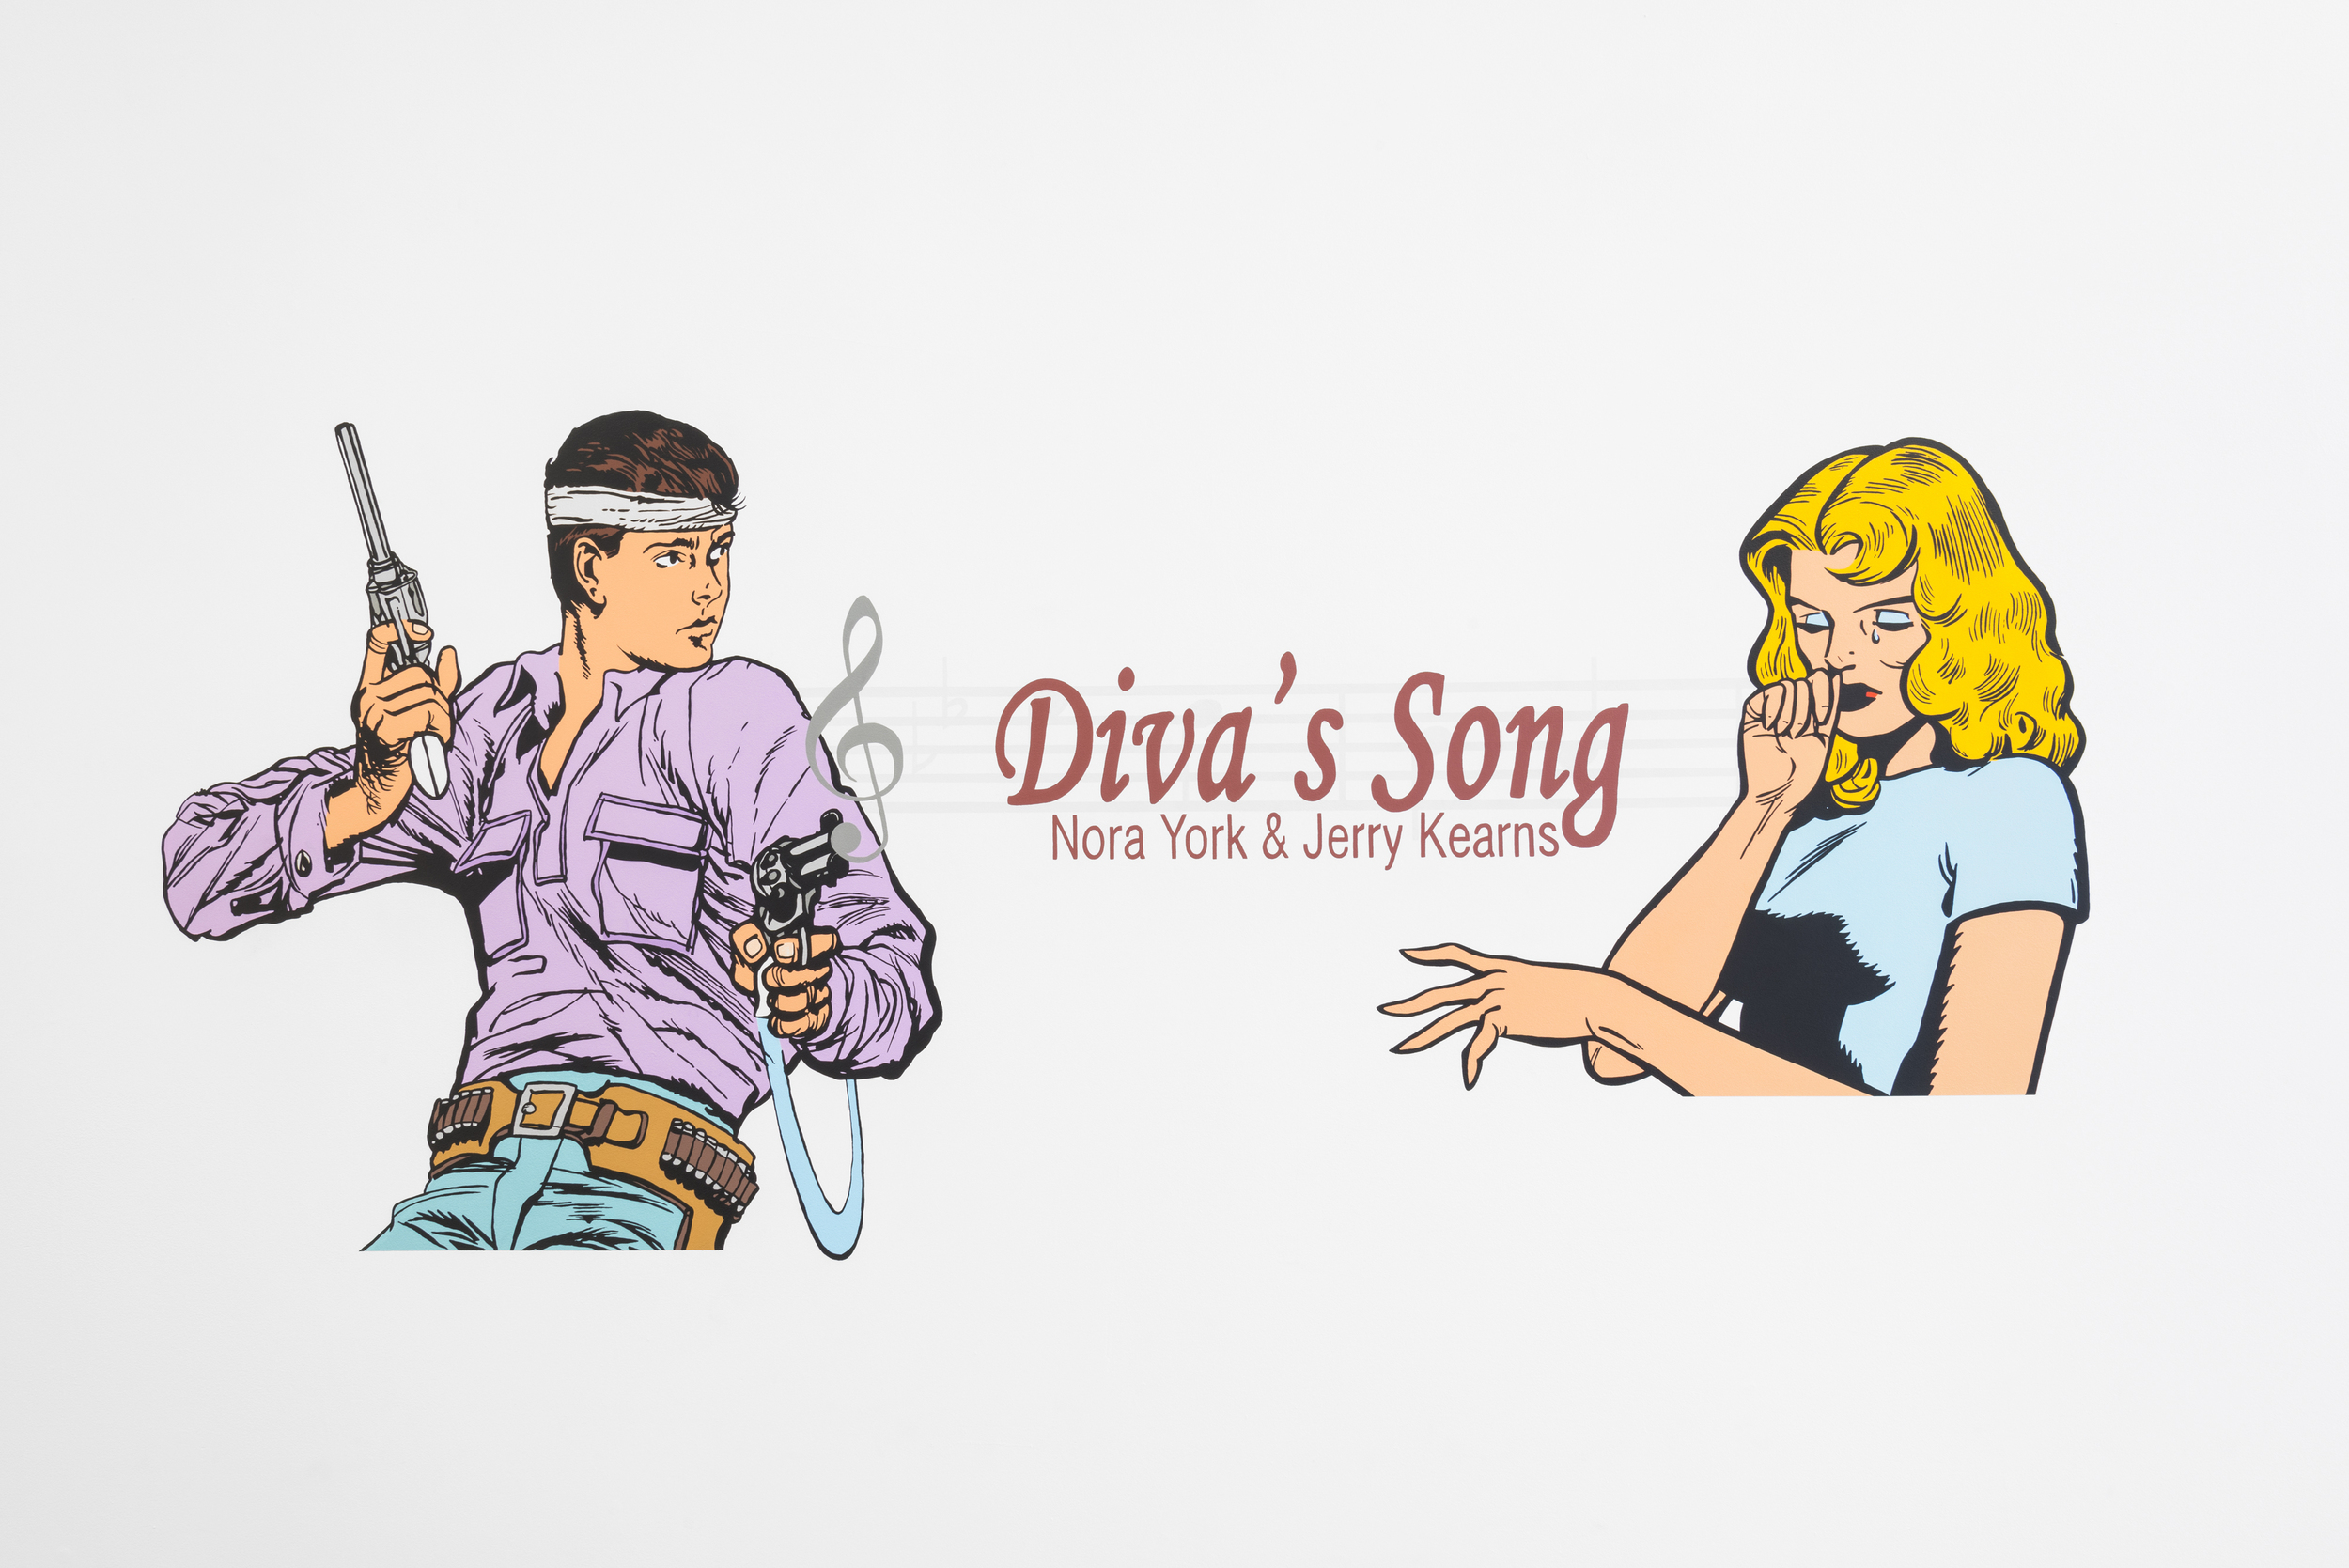 Diva's Song